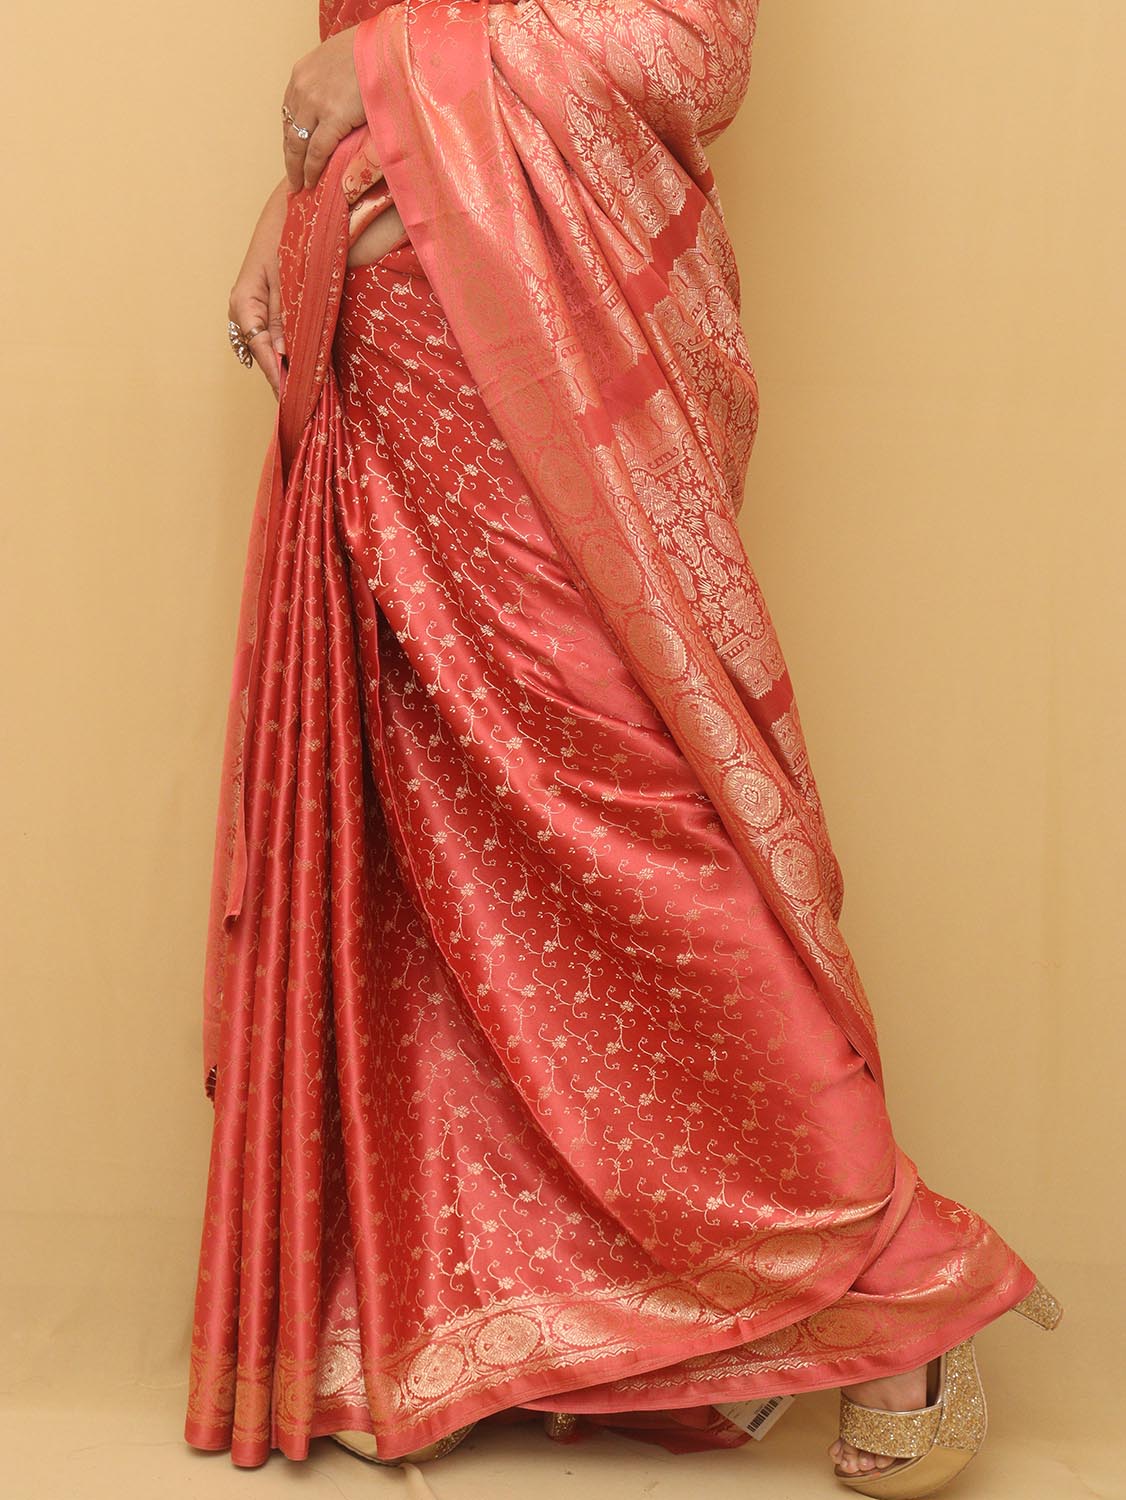 Shop Now for Red Handloom Banarasi Satin Silk Saree - Latest Collection - Luxurion World